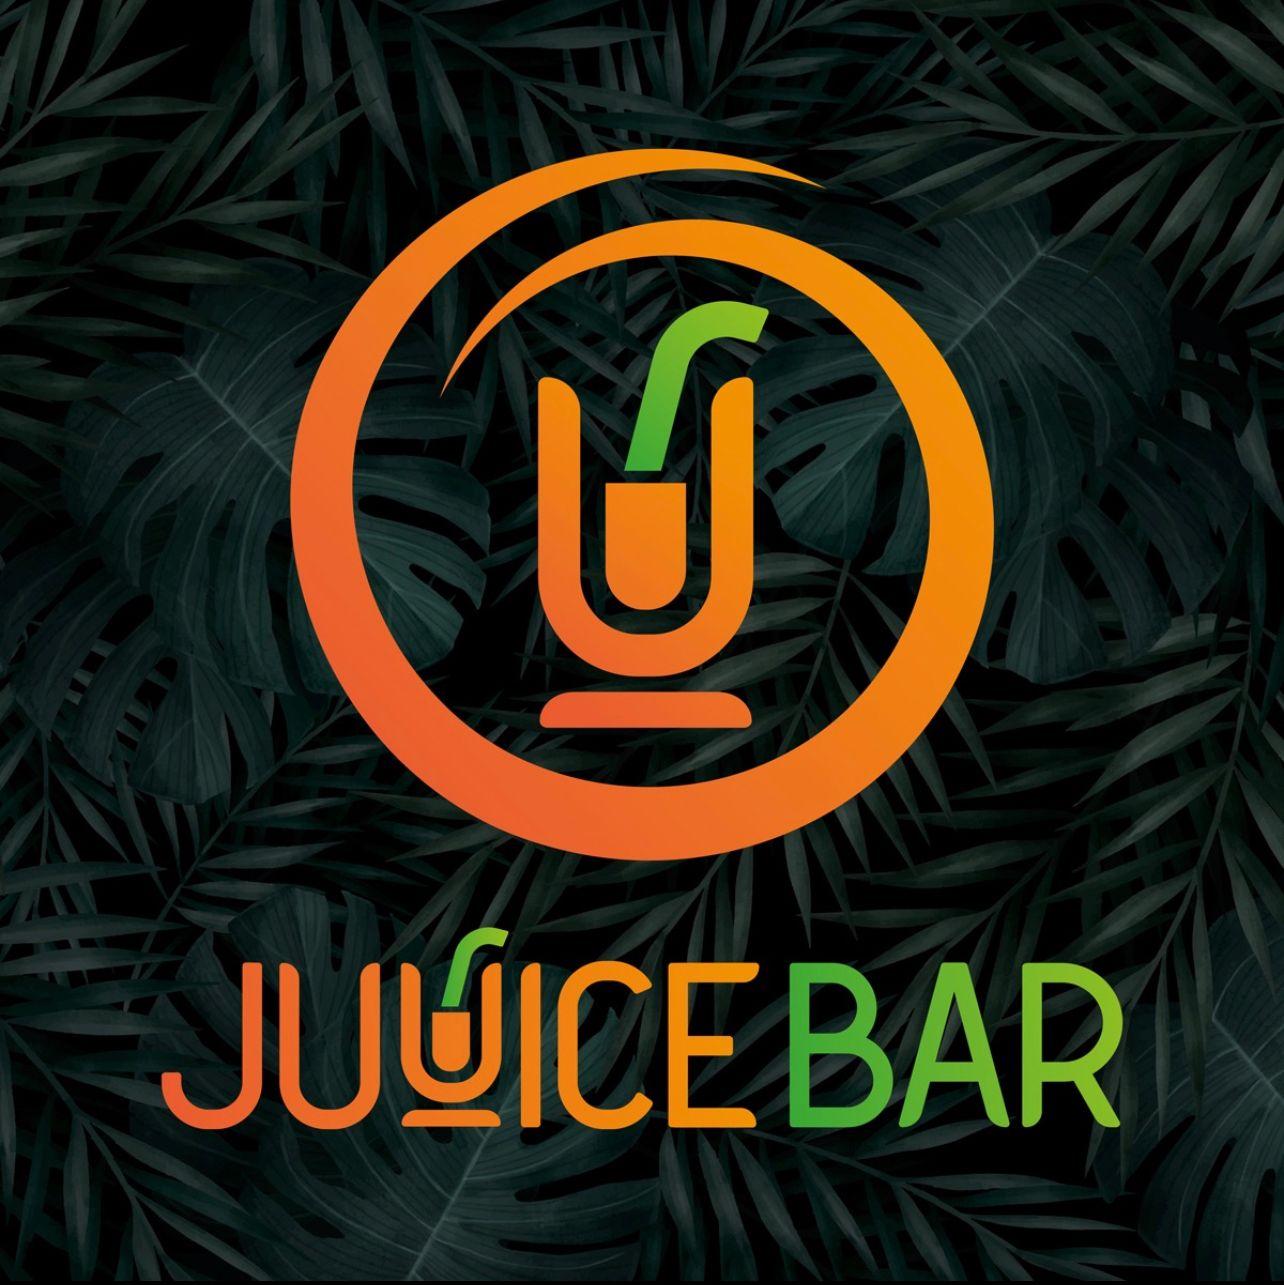 Juuice Bar